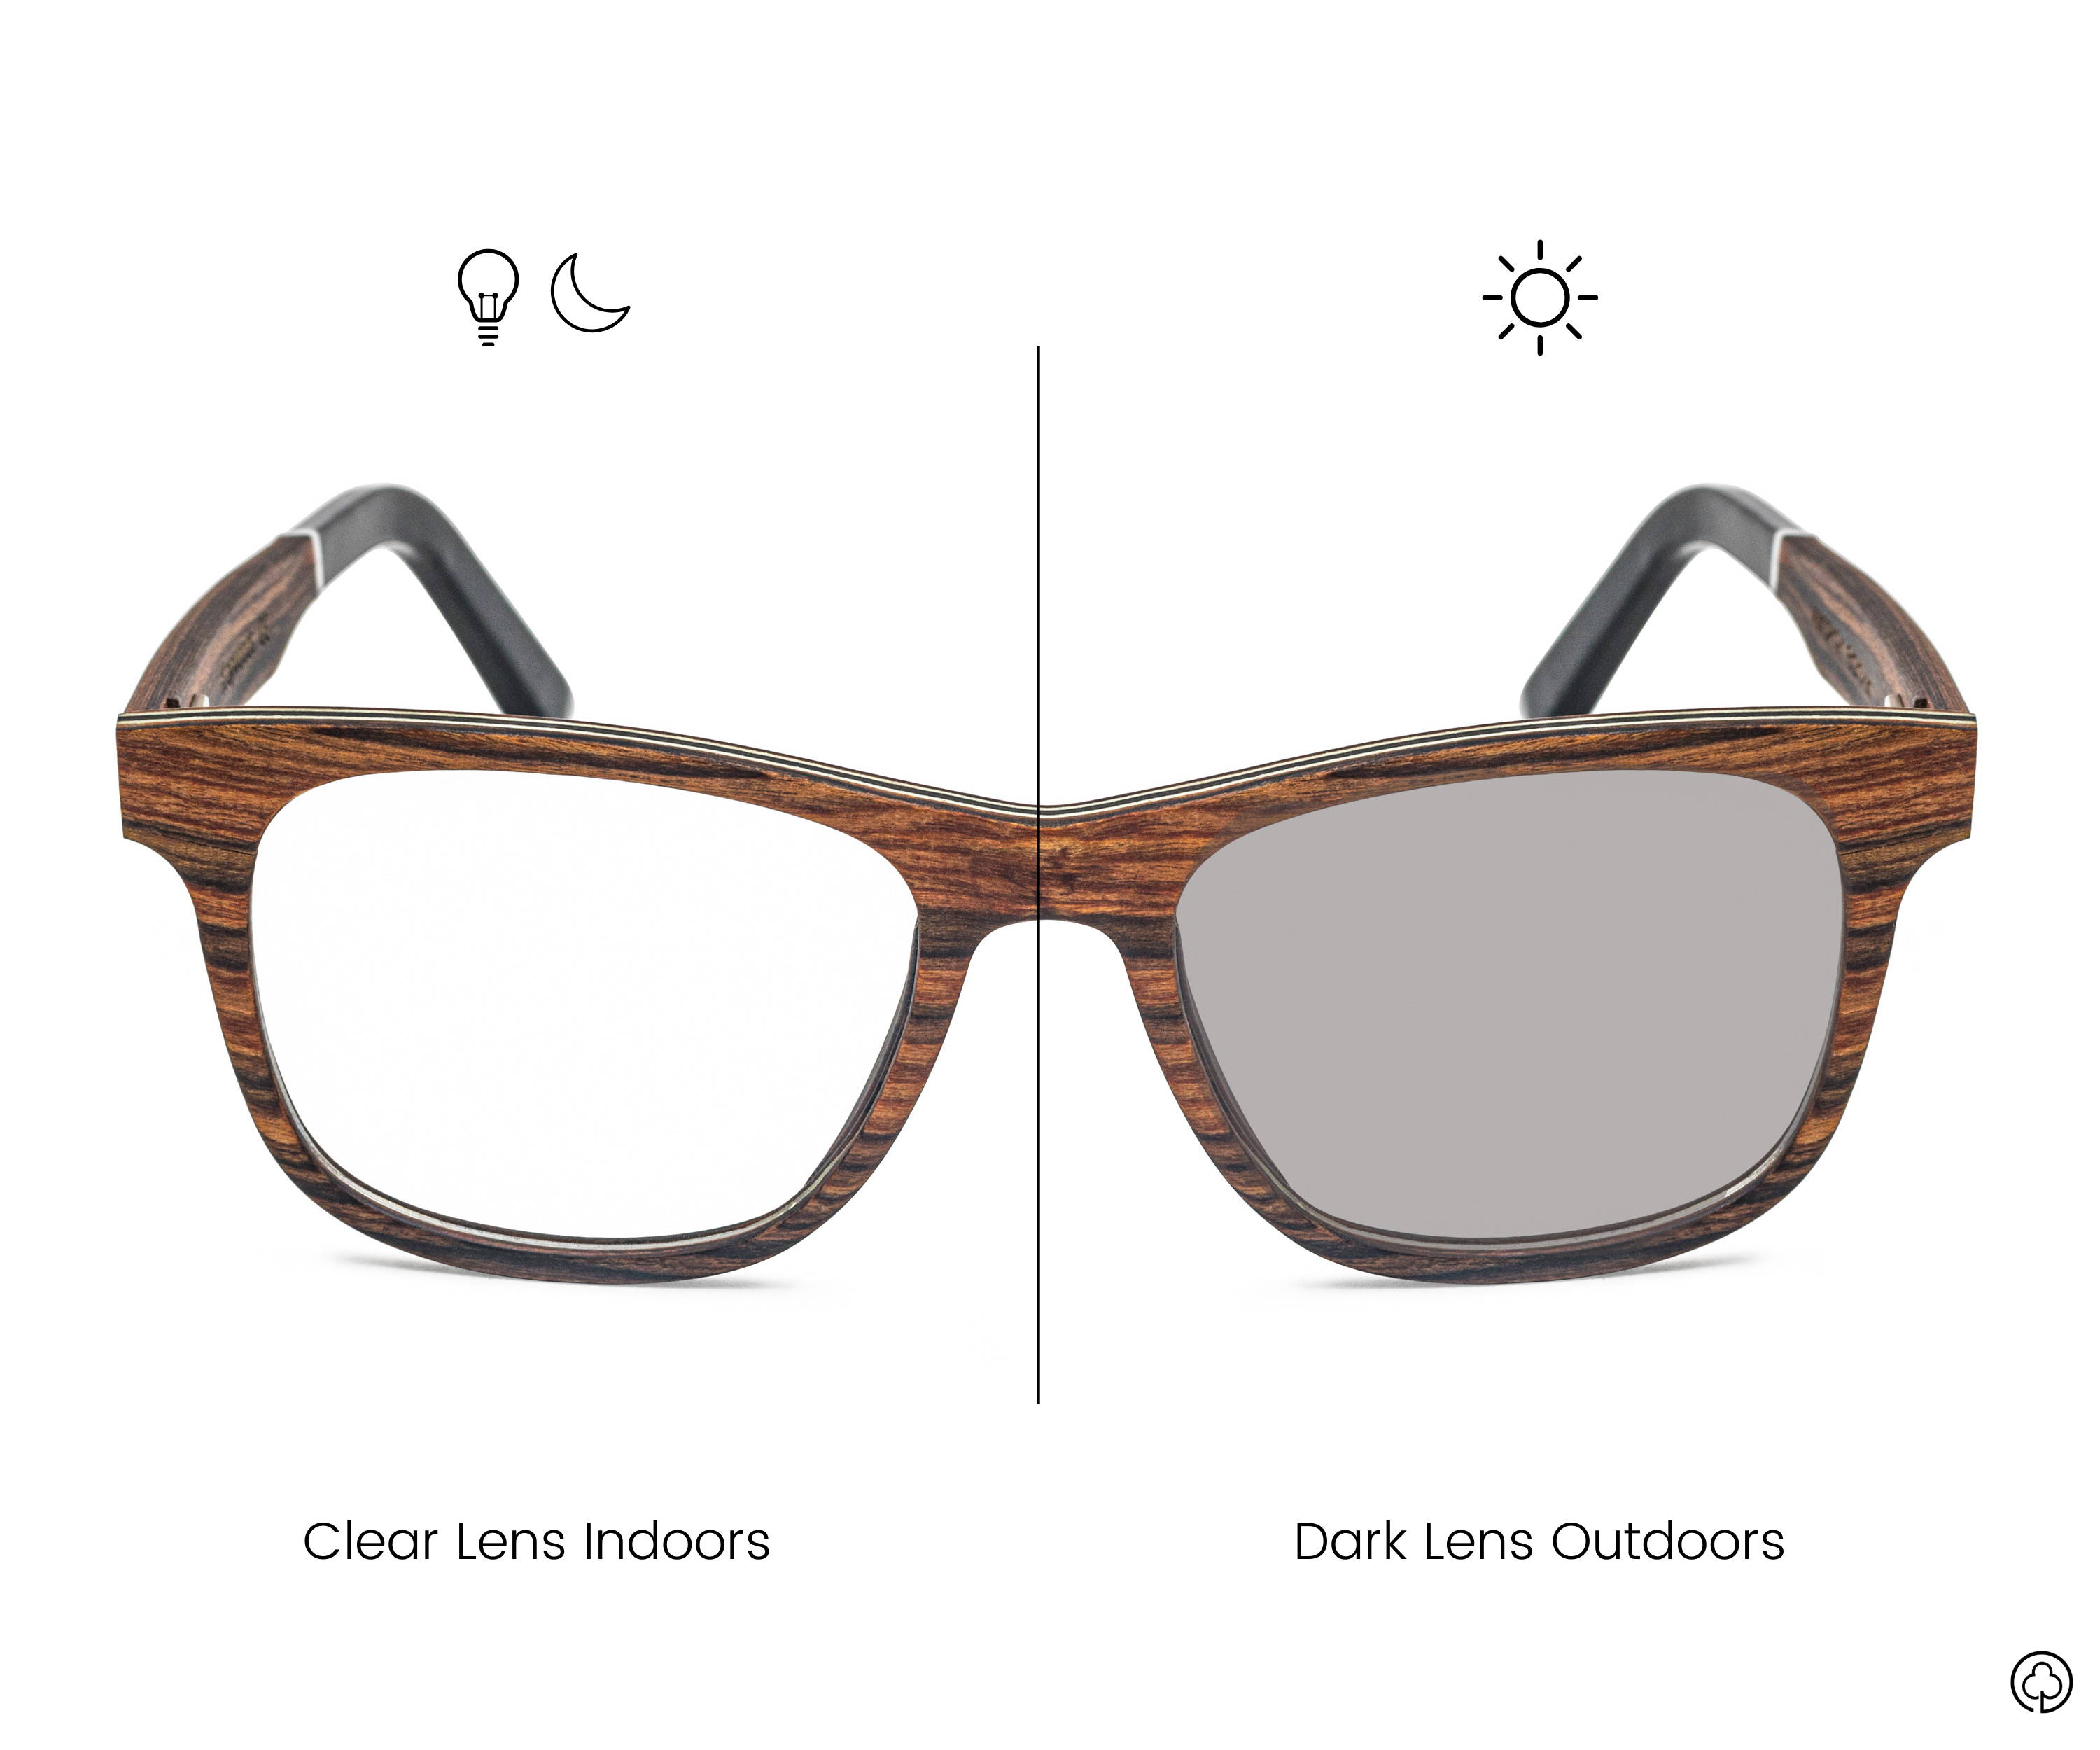 transition lenses, clear lens indoors vs dark lens outdoors